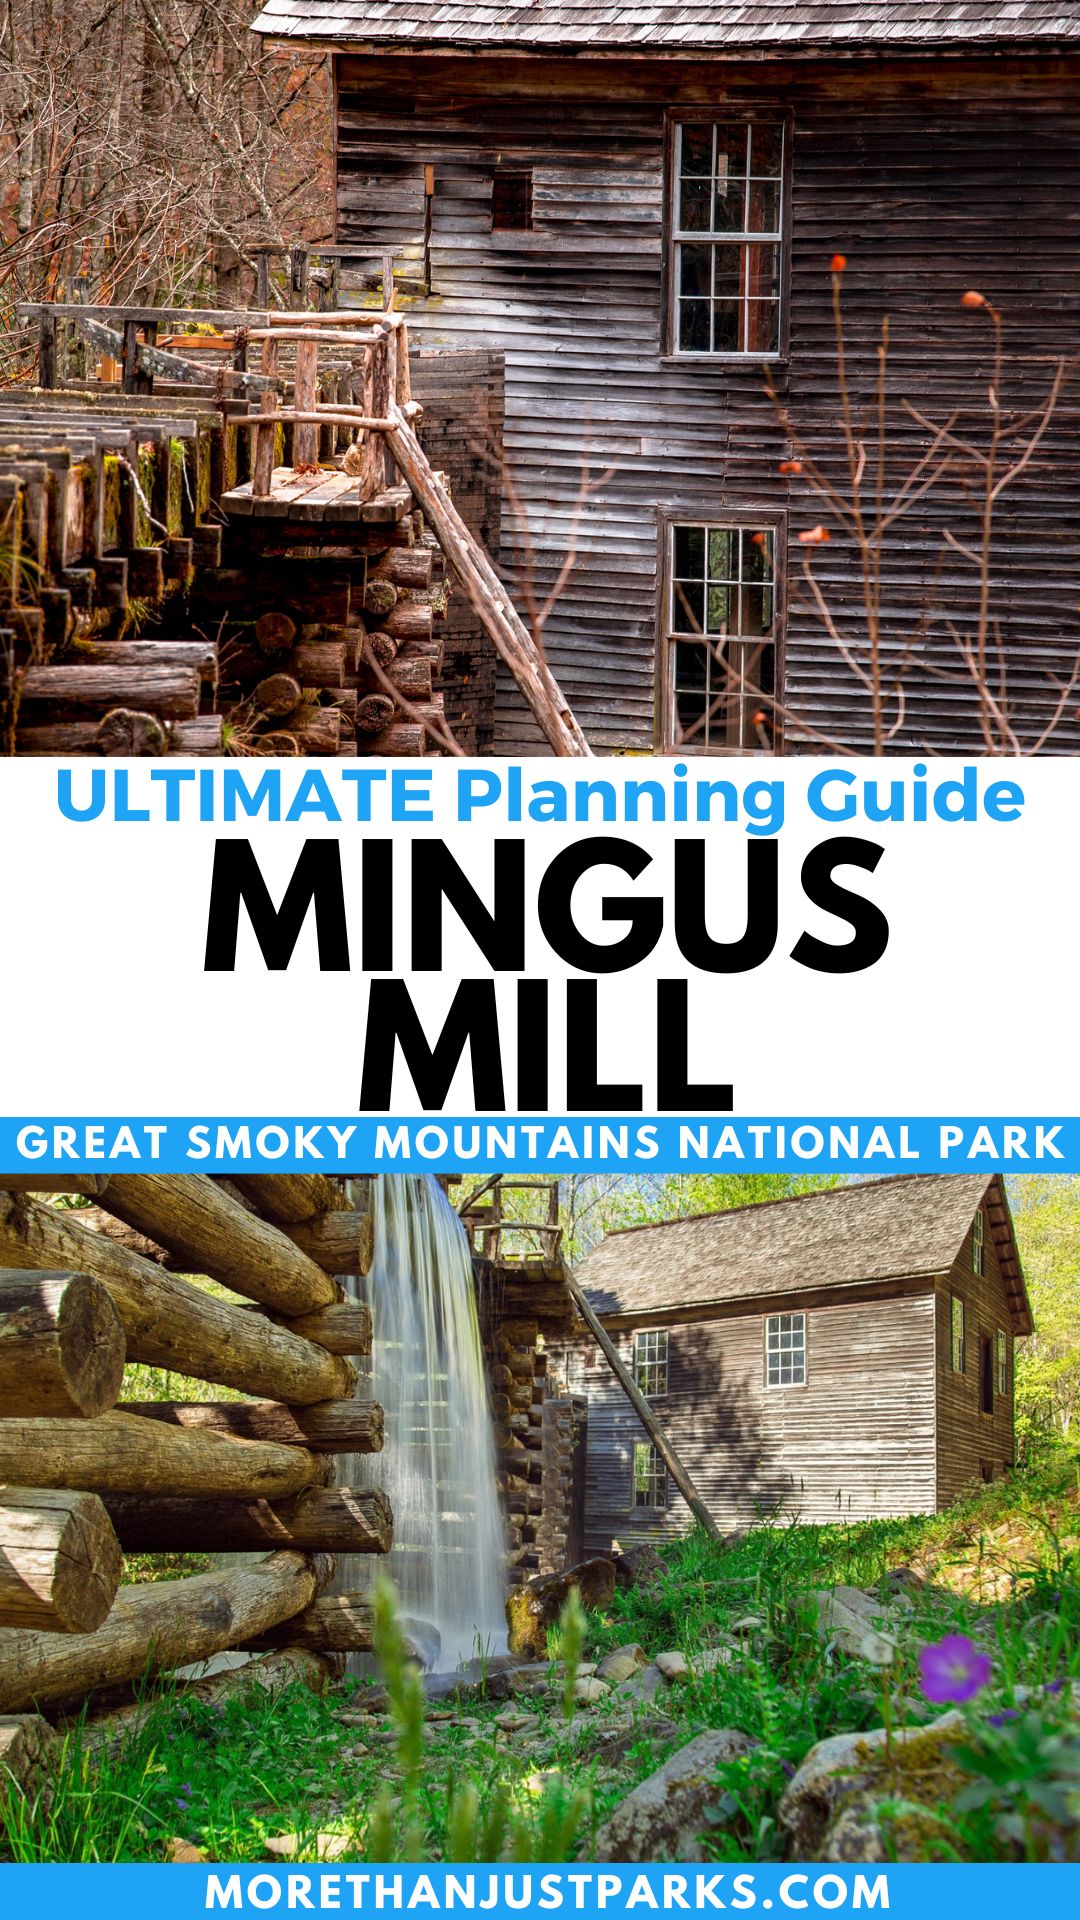 Mingus Mill Graphic